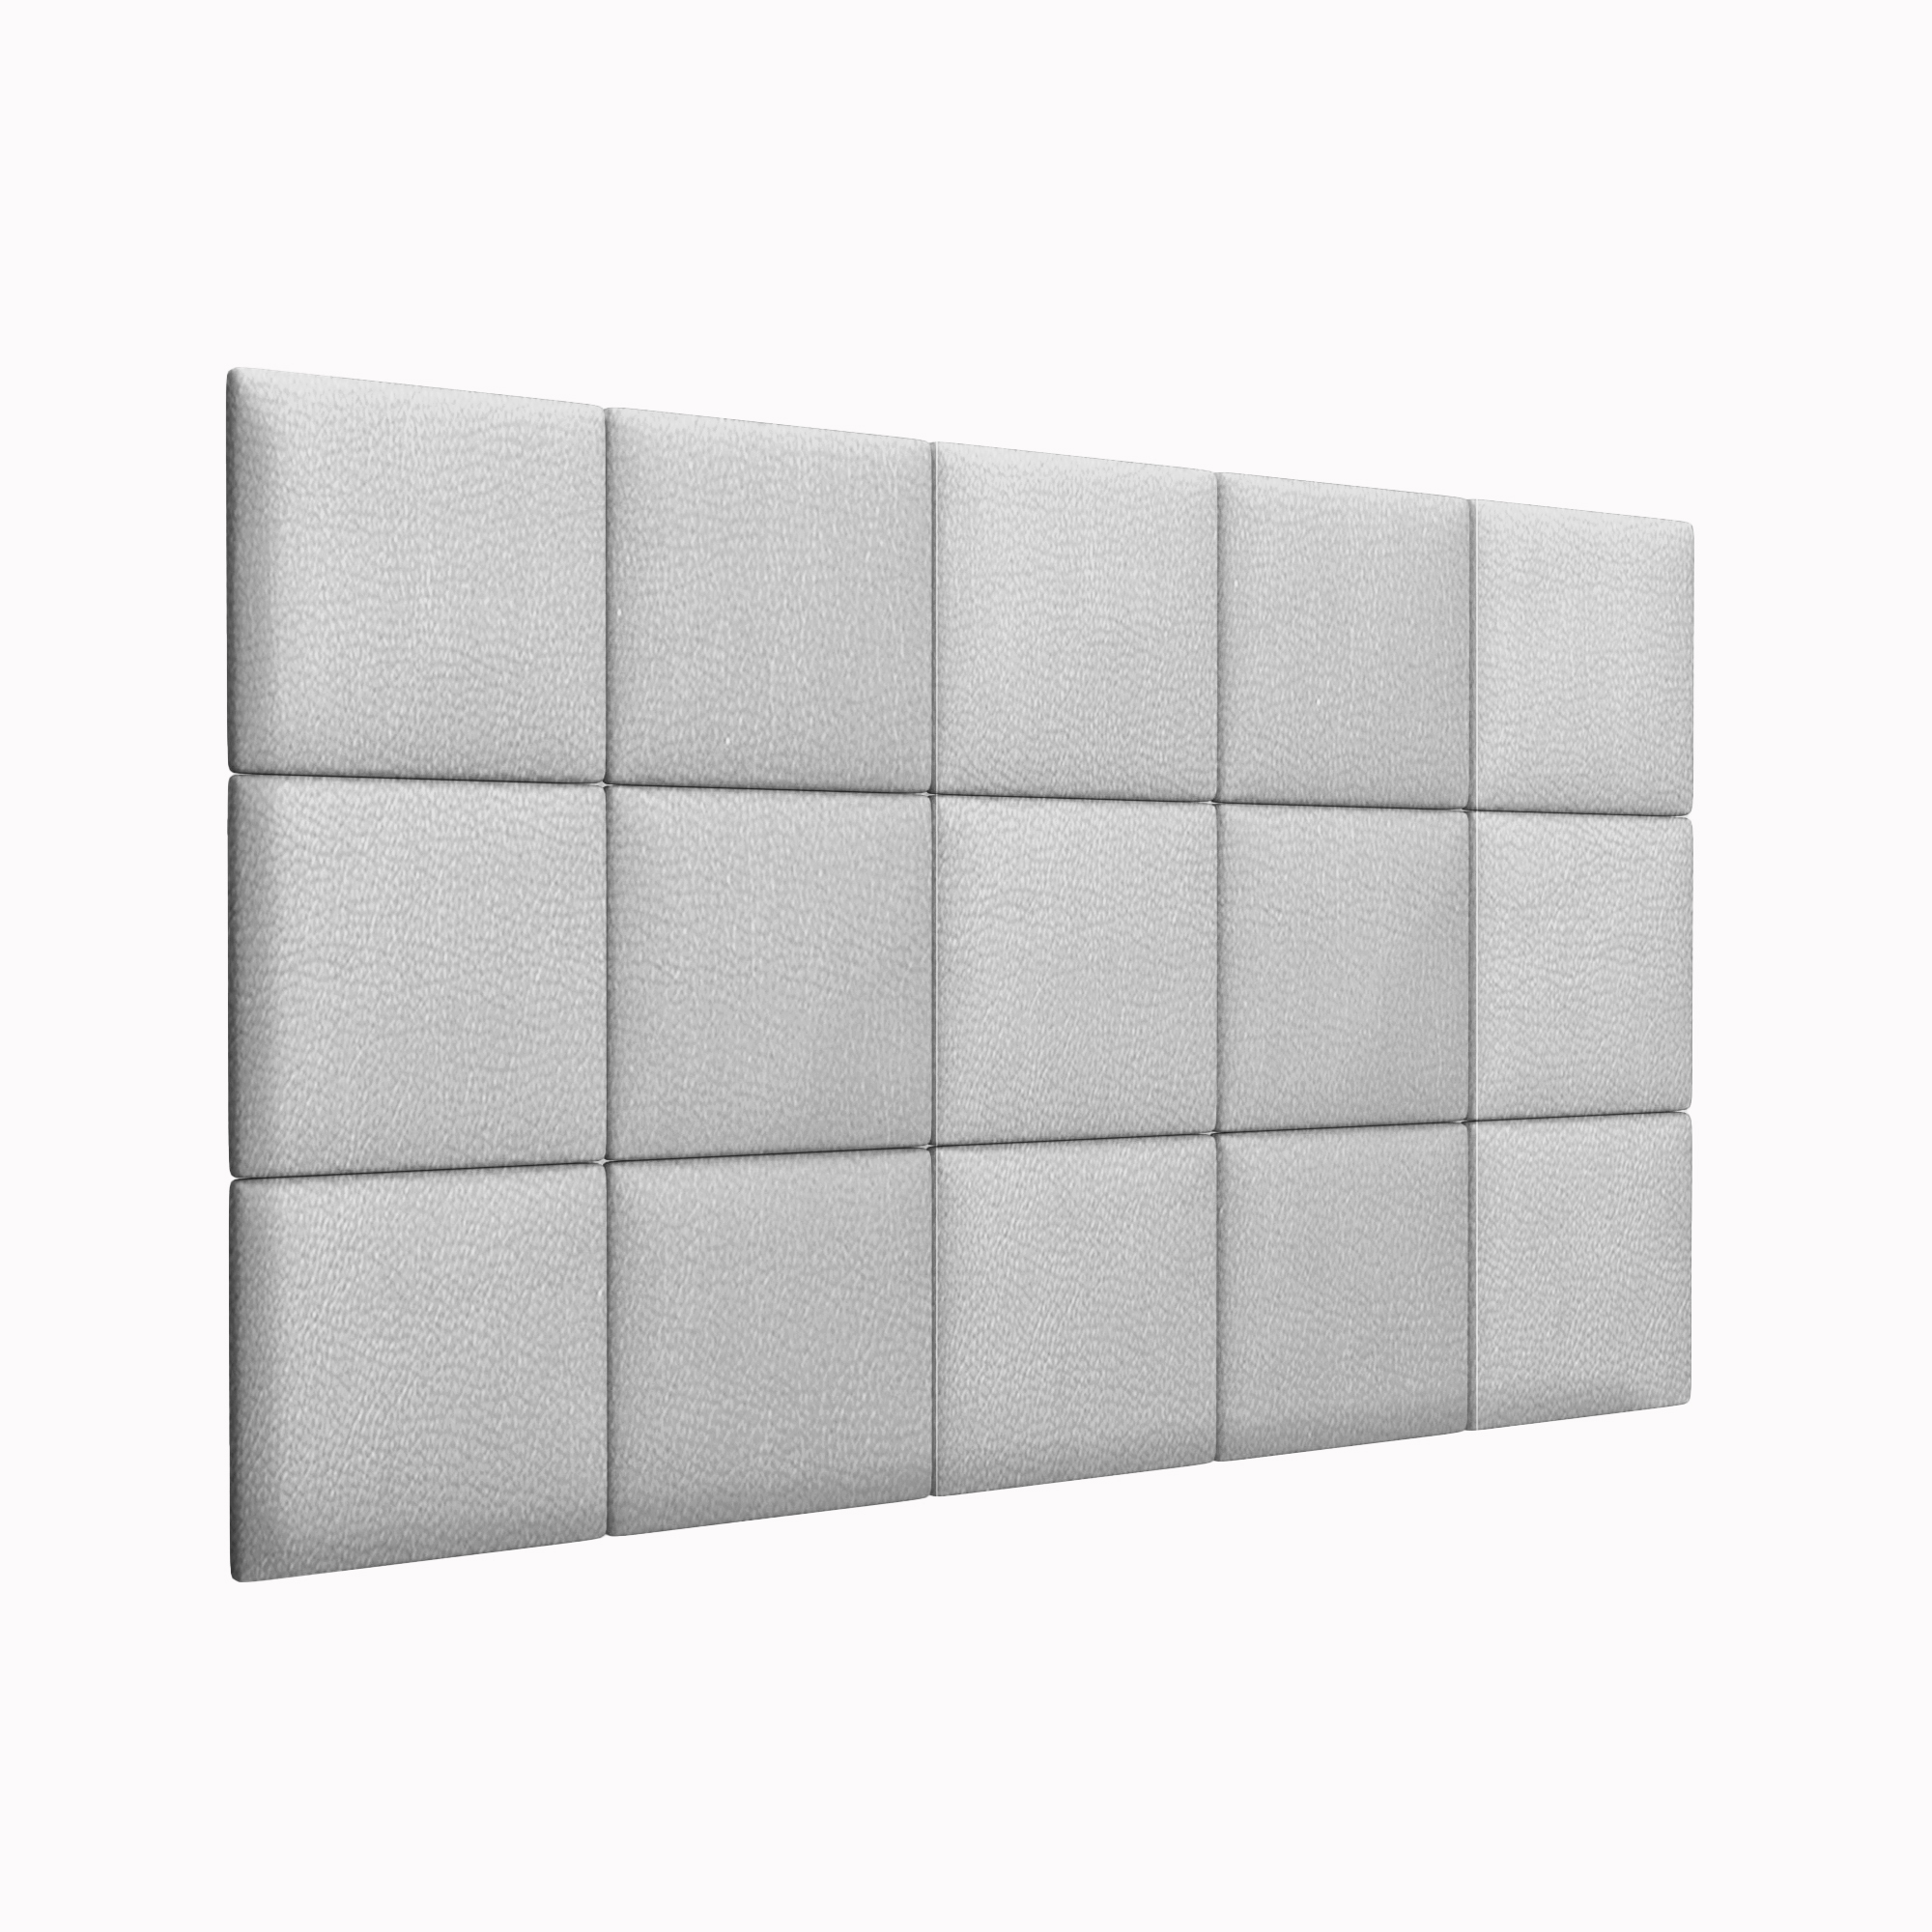 Мягкие стеновые панели Eco Leather Silver 30х30 см 4 шт.